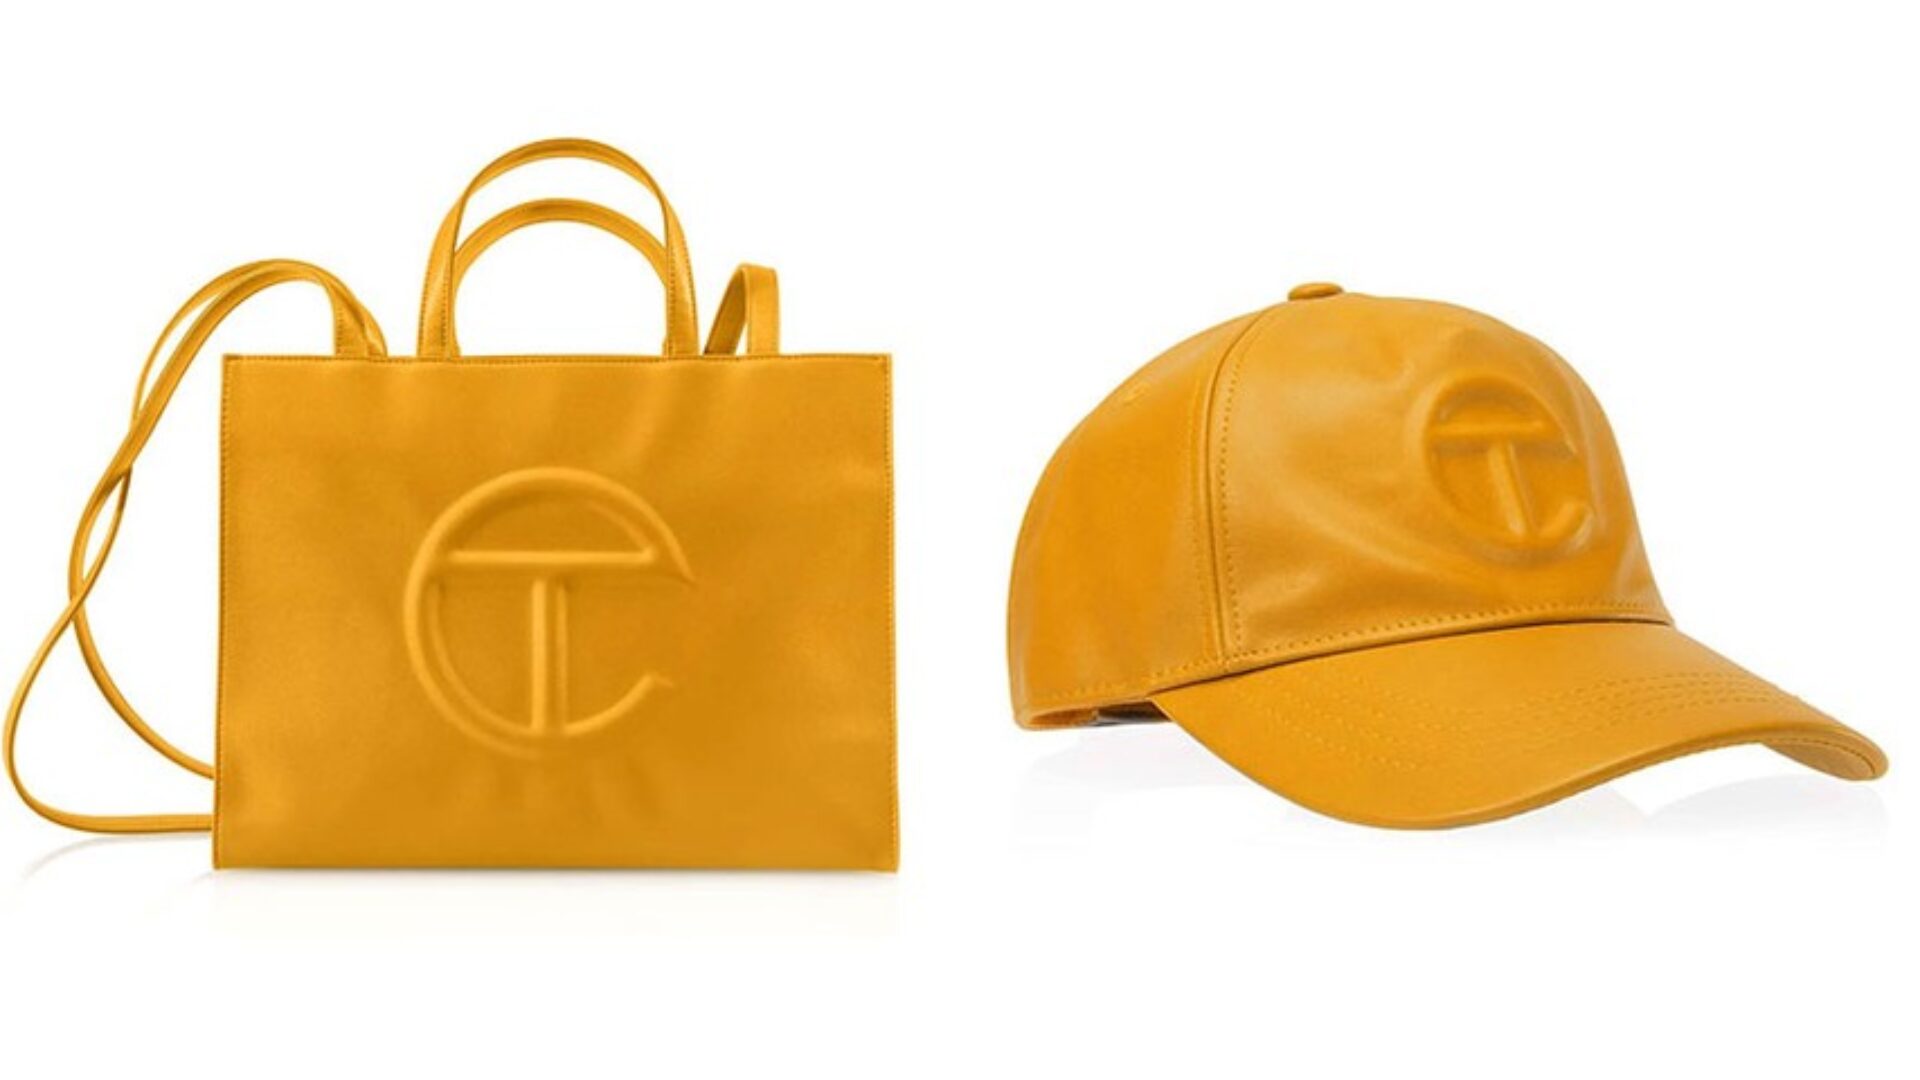 Telfar Bags Surpasses All Legacy Luxury Brands In Resale Market Value